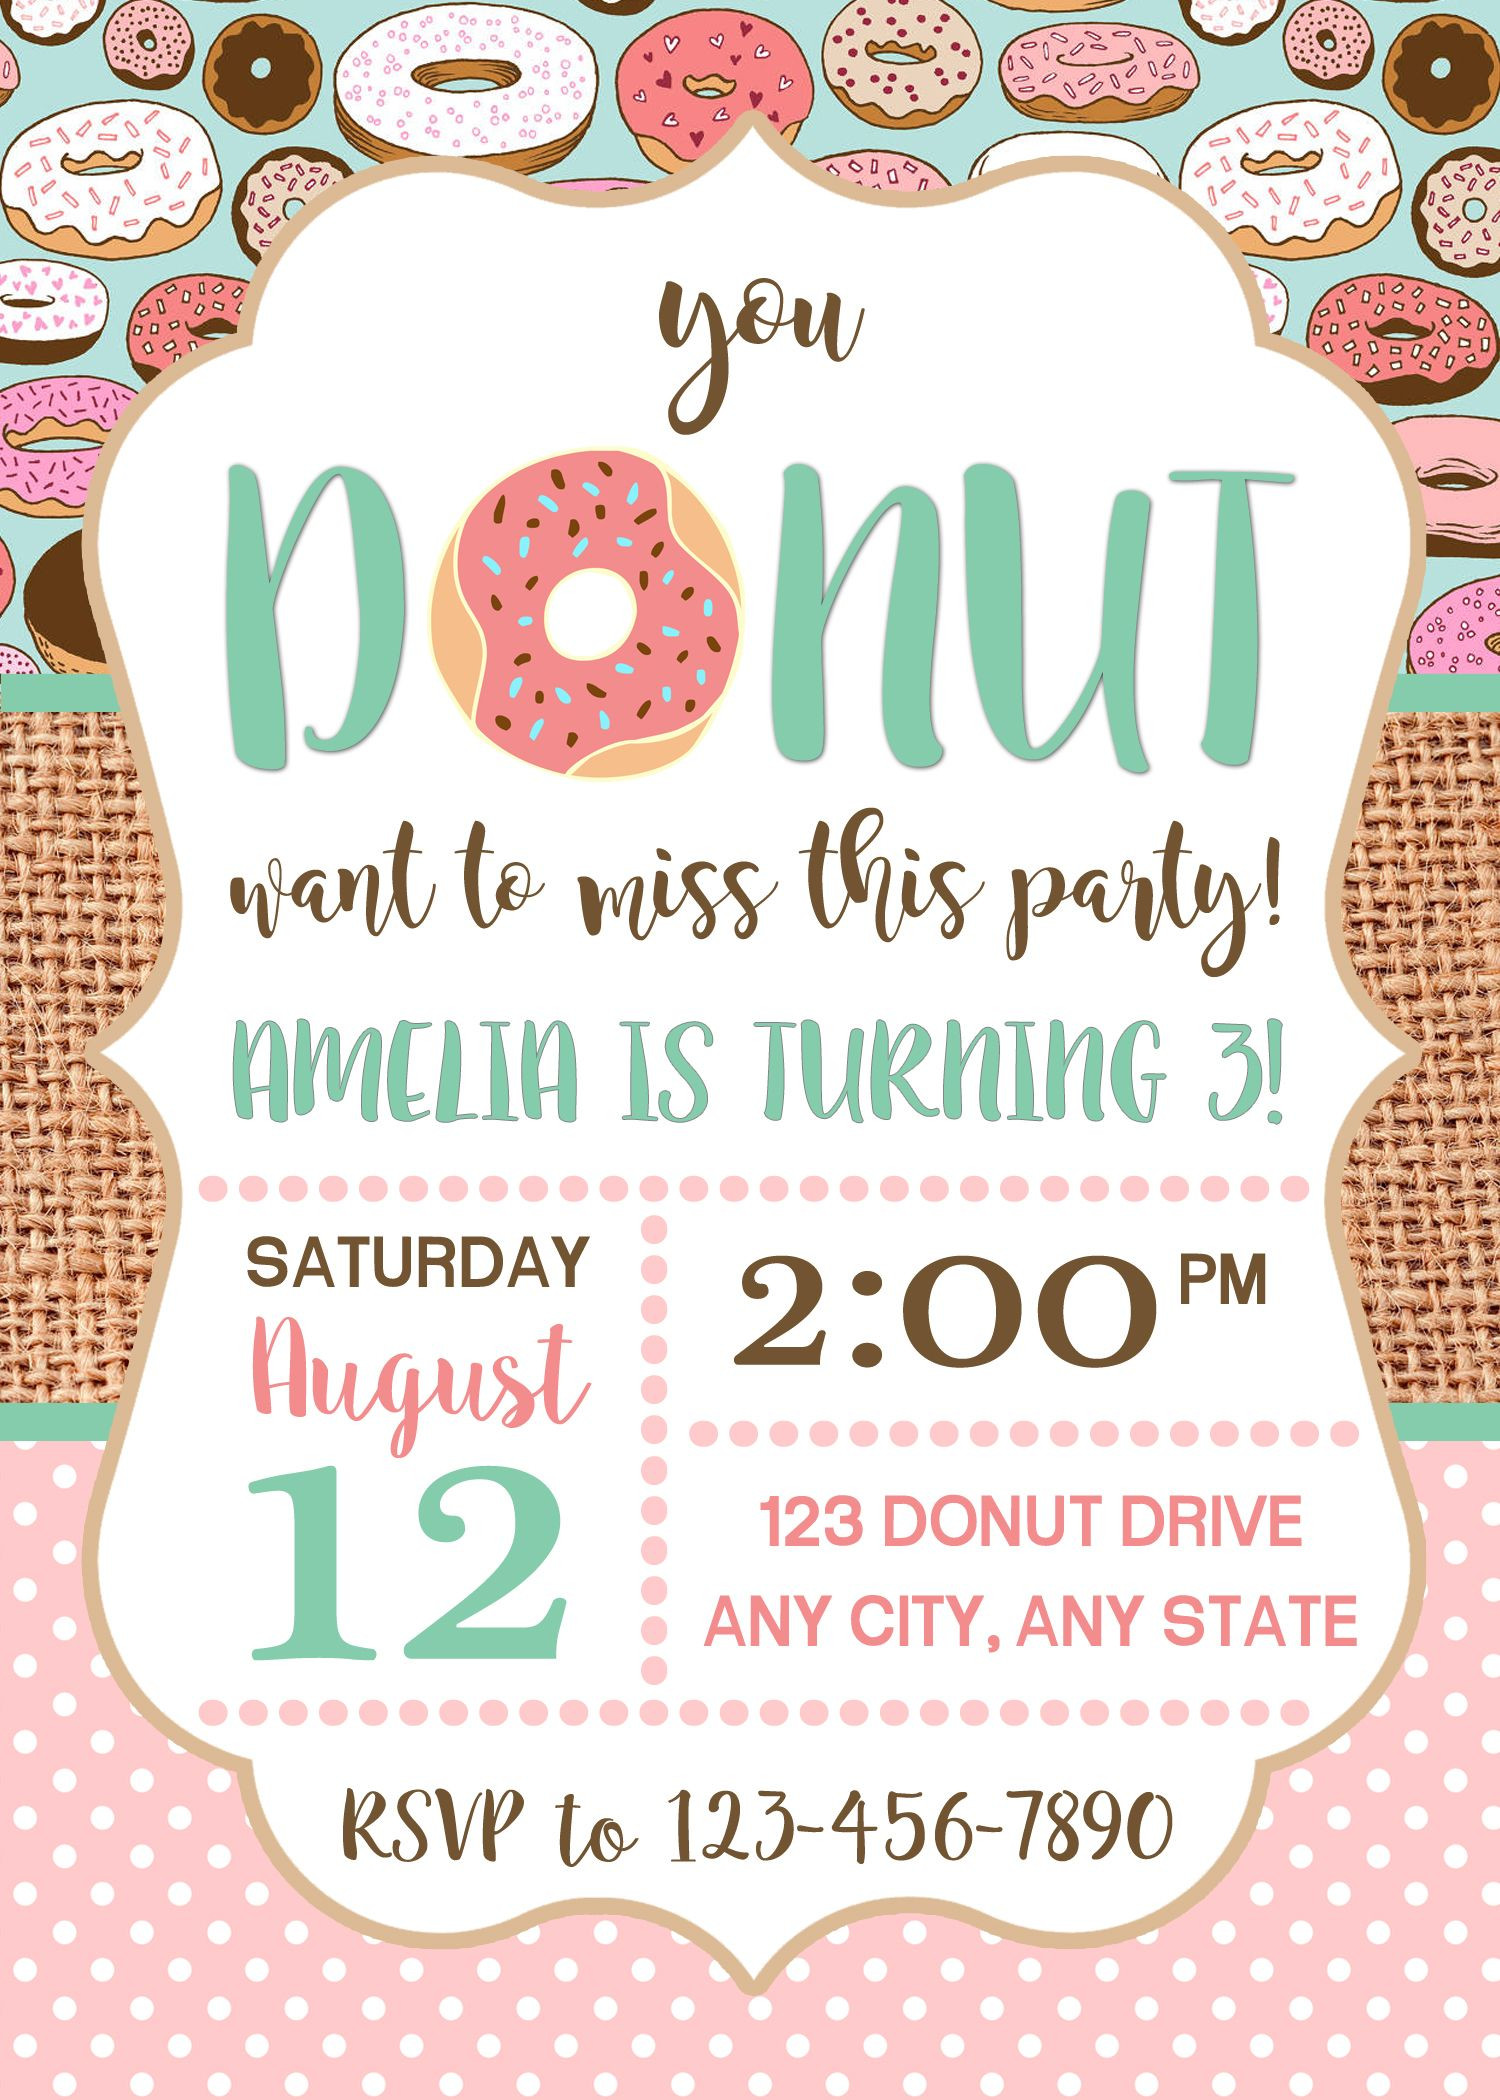 Best ideas about Birthday Invitation Ideas
. Save or Pin Donut Invitation Donut Party Birthday Invitation Donut Now.